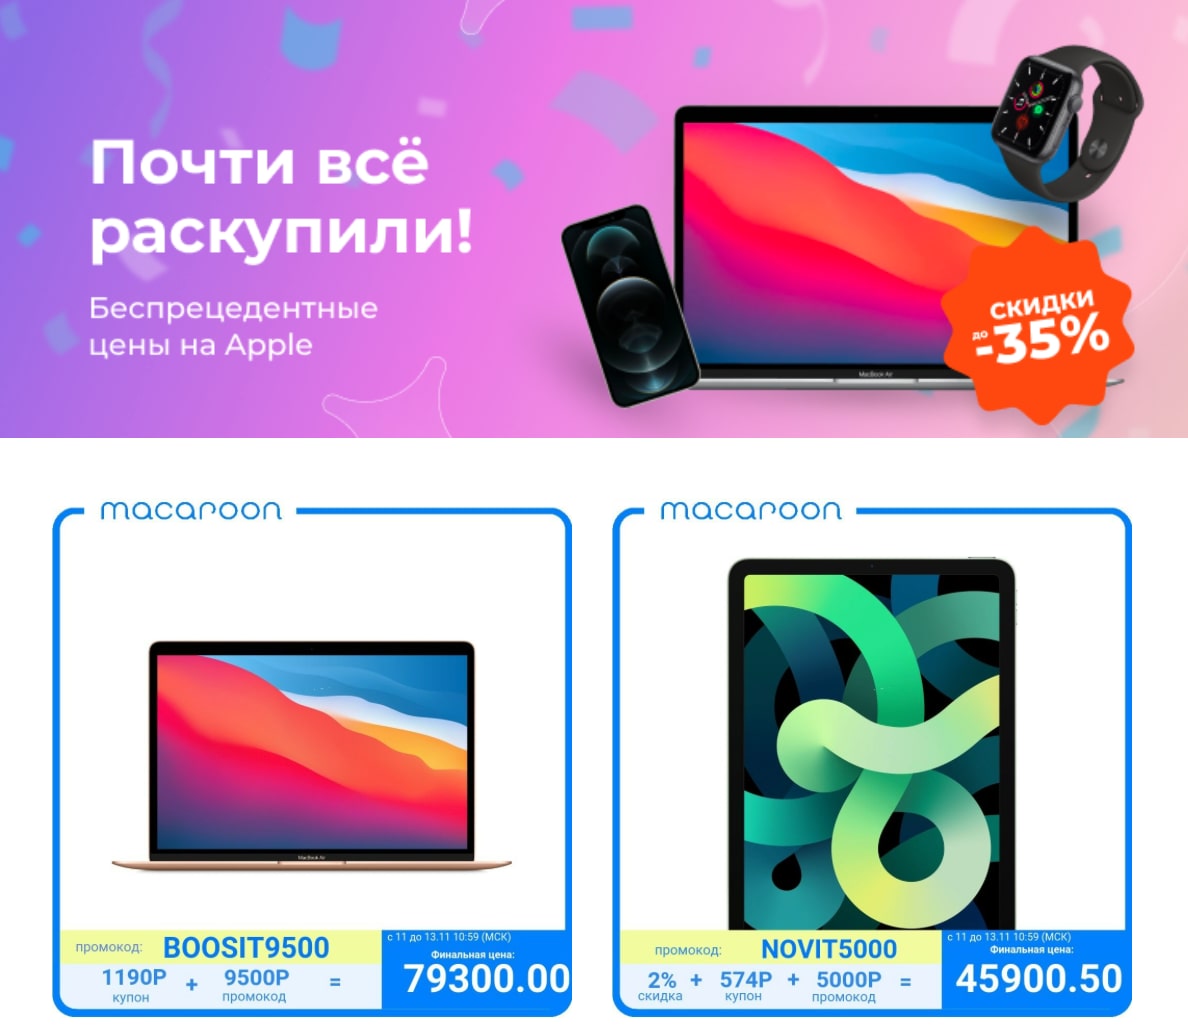 MacBook Air с чипом M1 всего за 80 100 рублей